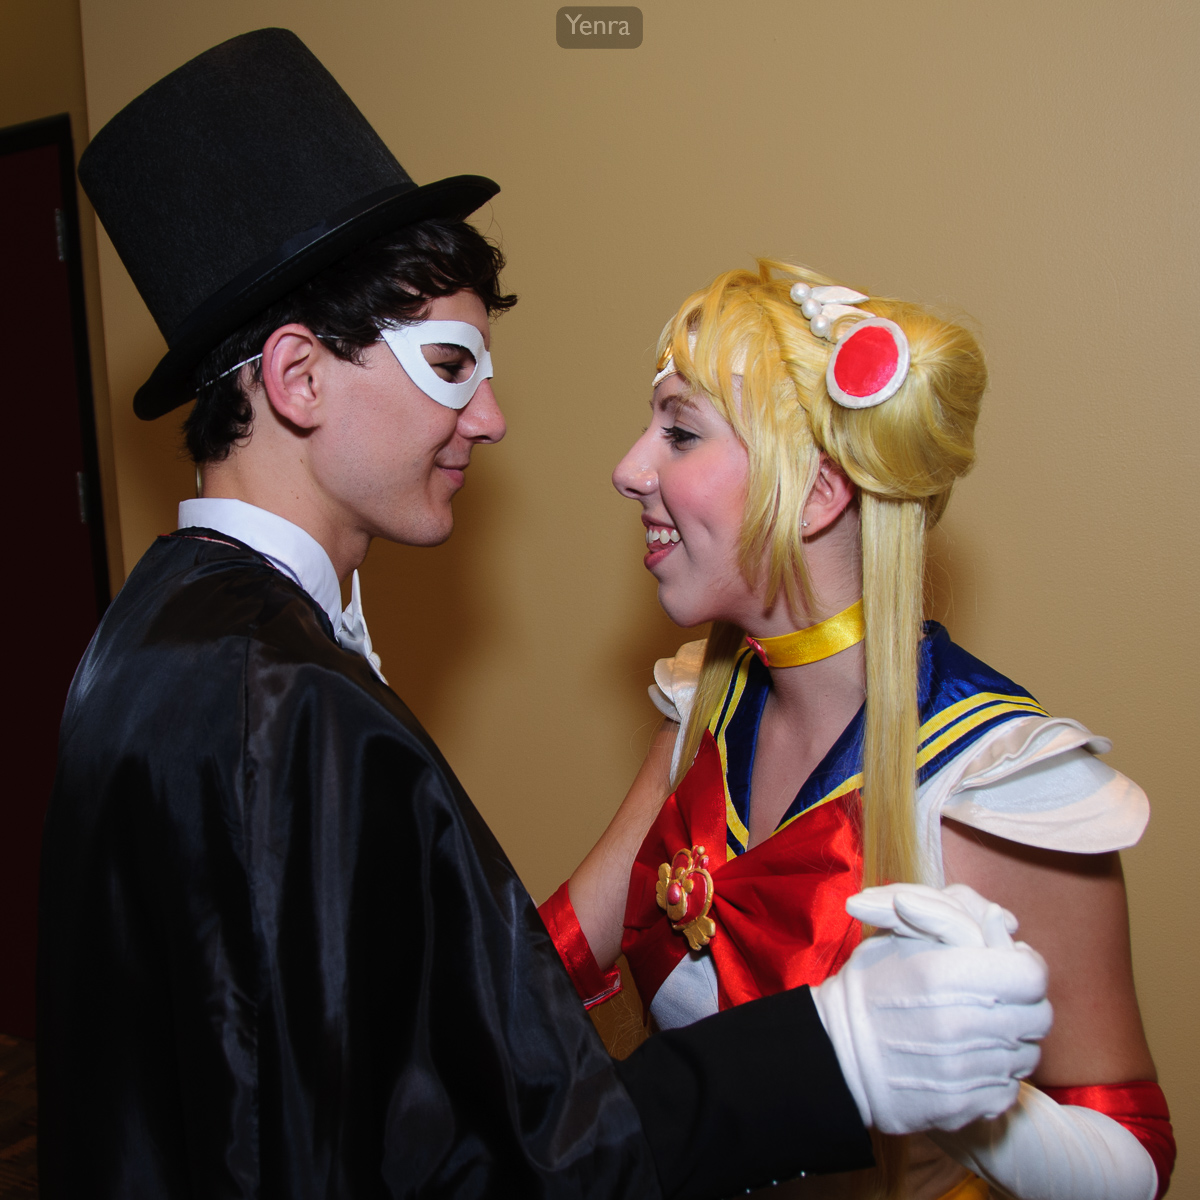 Tuxedo Mask and Sailor Moon